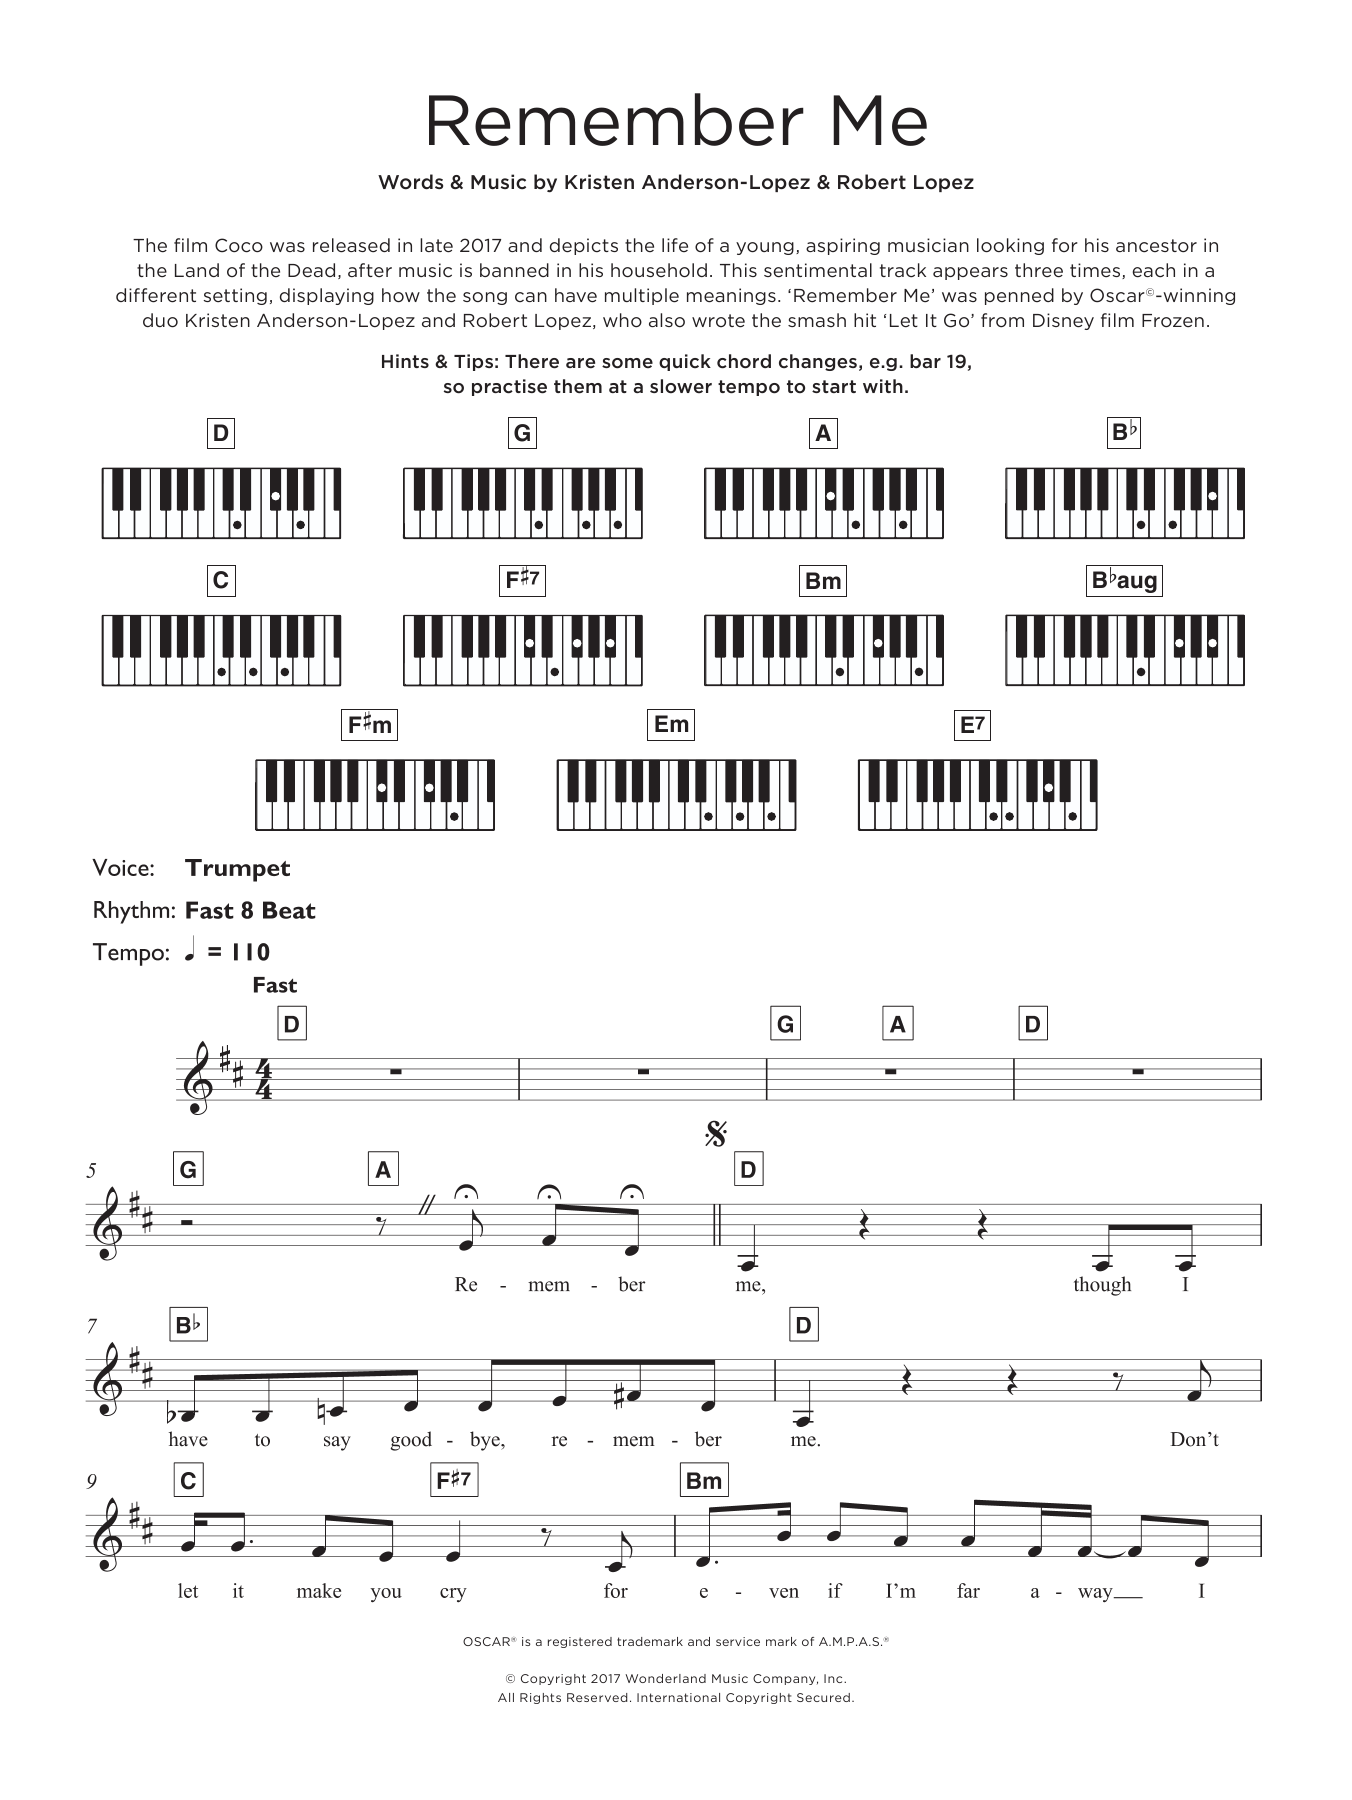 Kristen Anderson-Lopez & Robert Lopez Remember Me (Ernesto de la Cruz) (from Coco) Sheet Music Notes & Chords for Piano Solo - Download or Print PDF